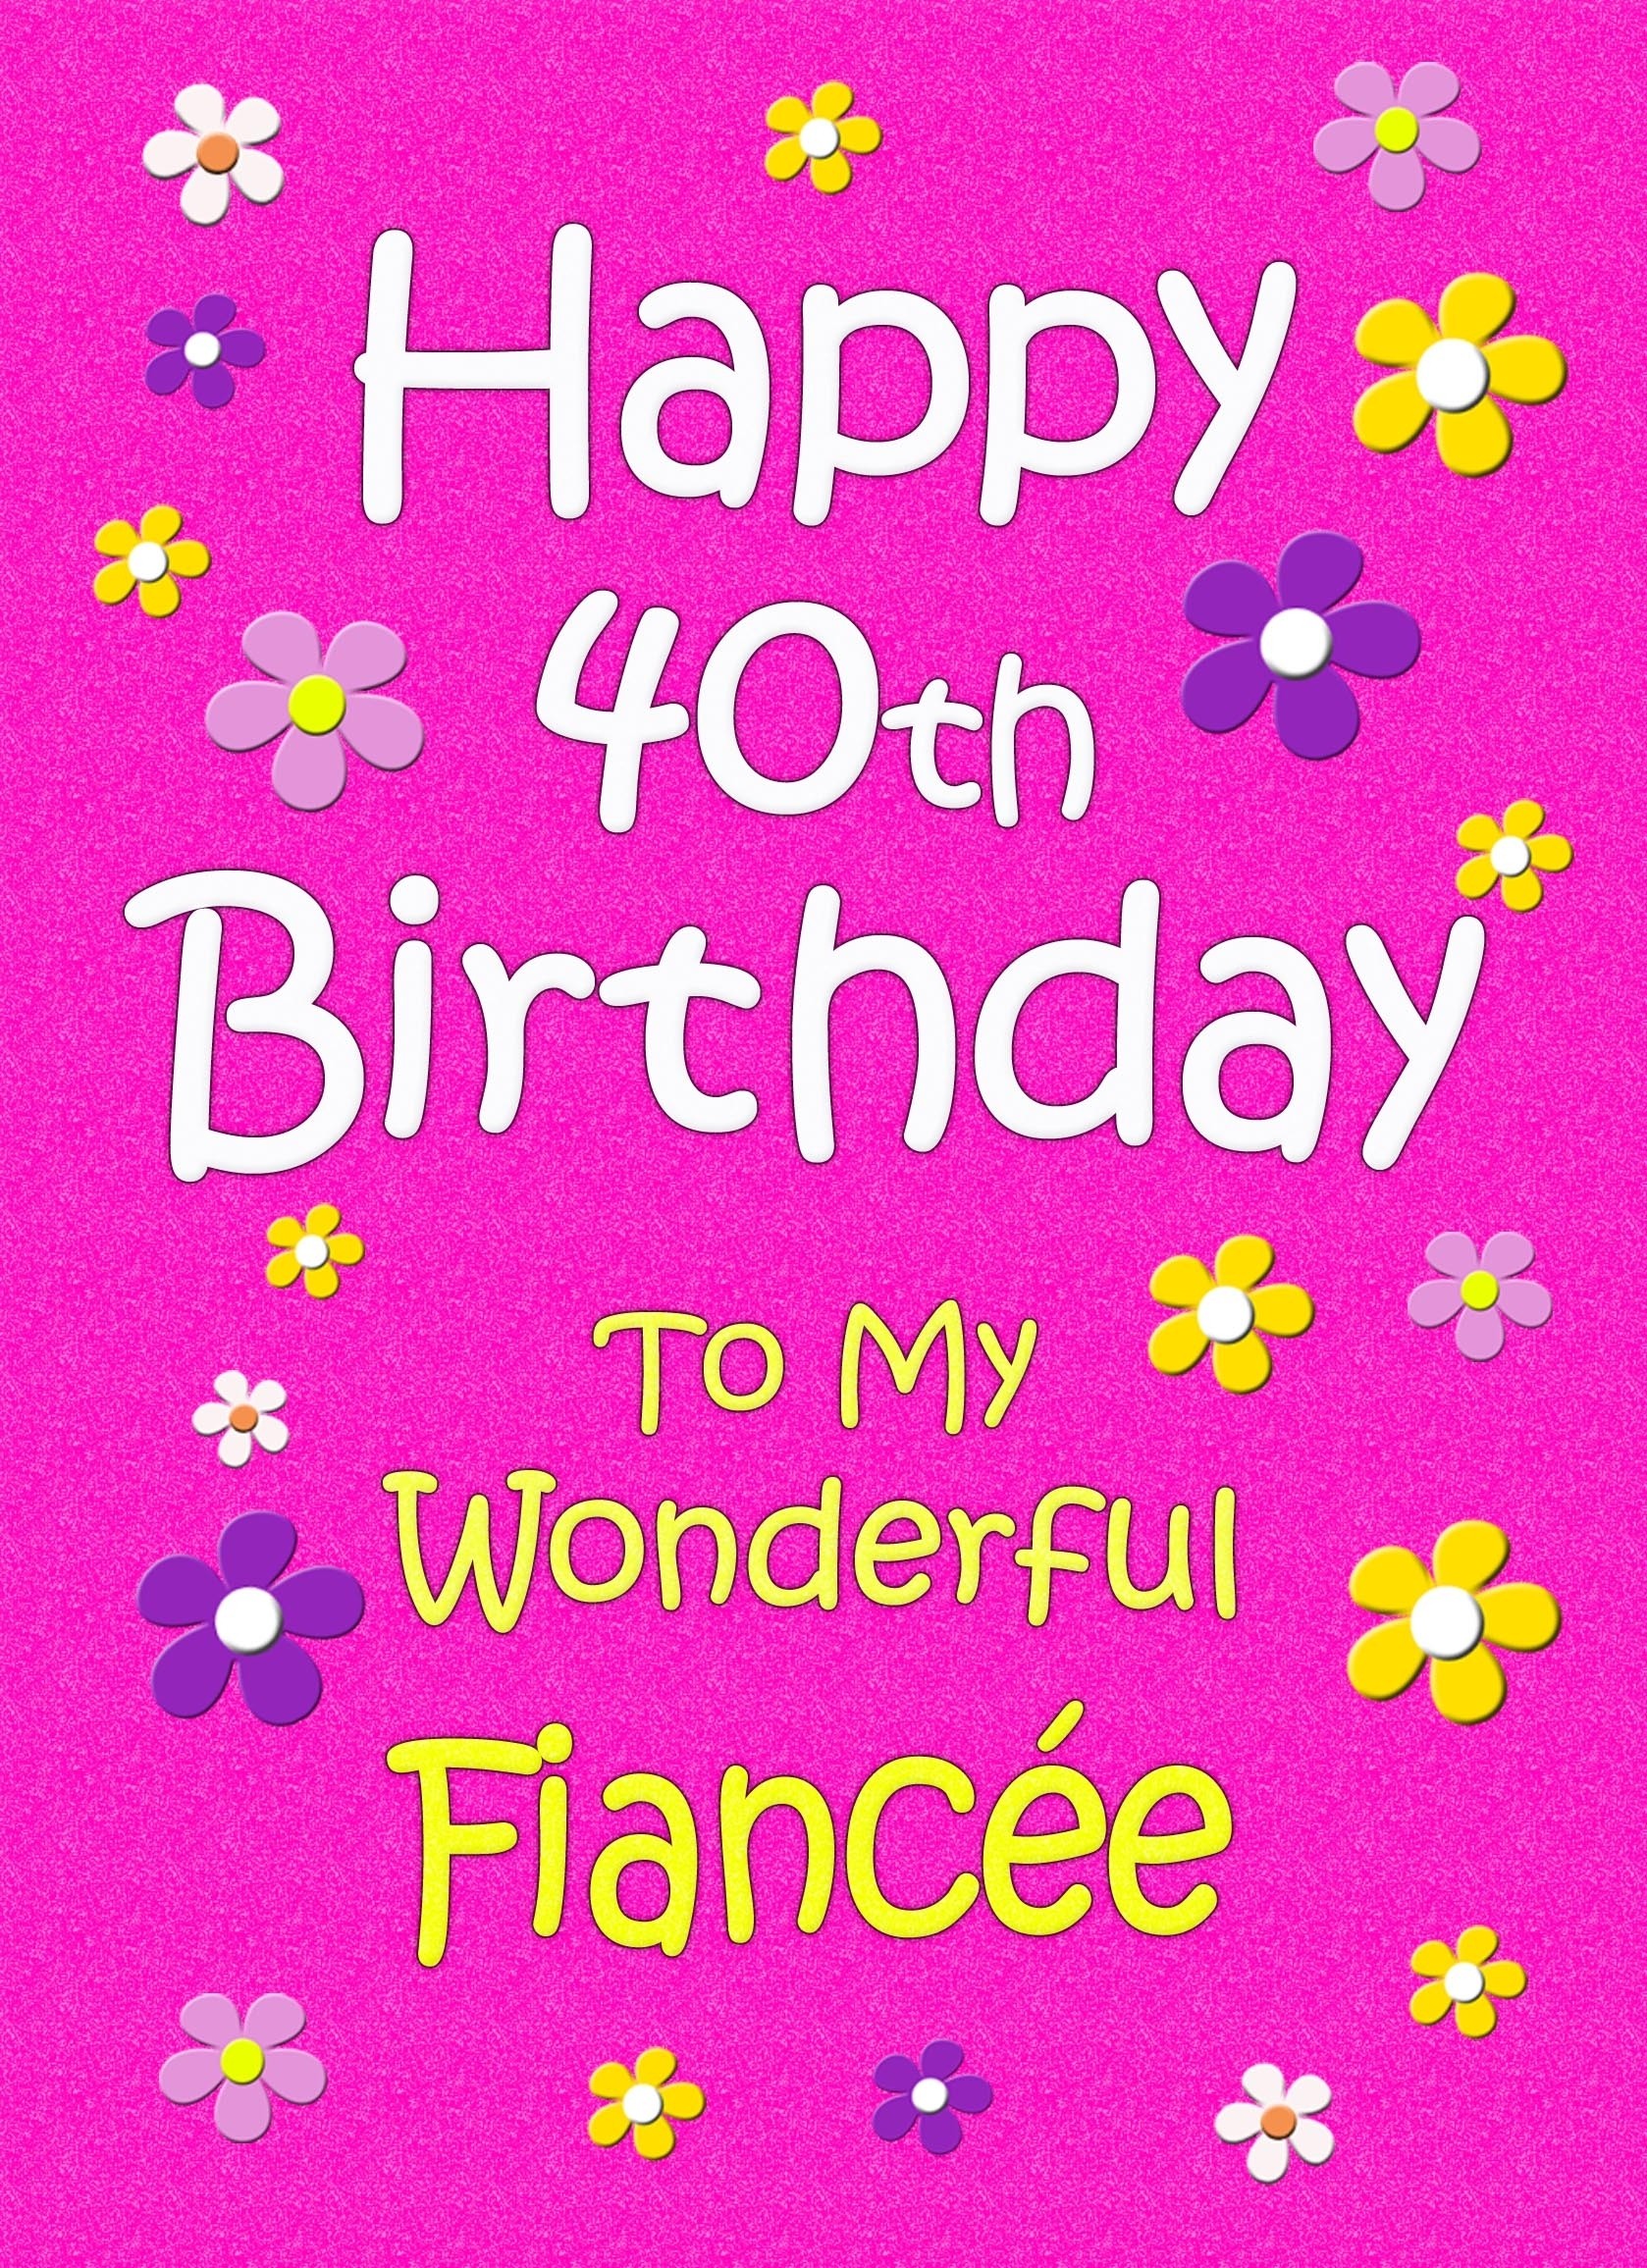 Fiancee 40th Birthday Card (Pink)